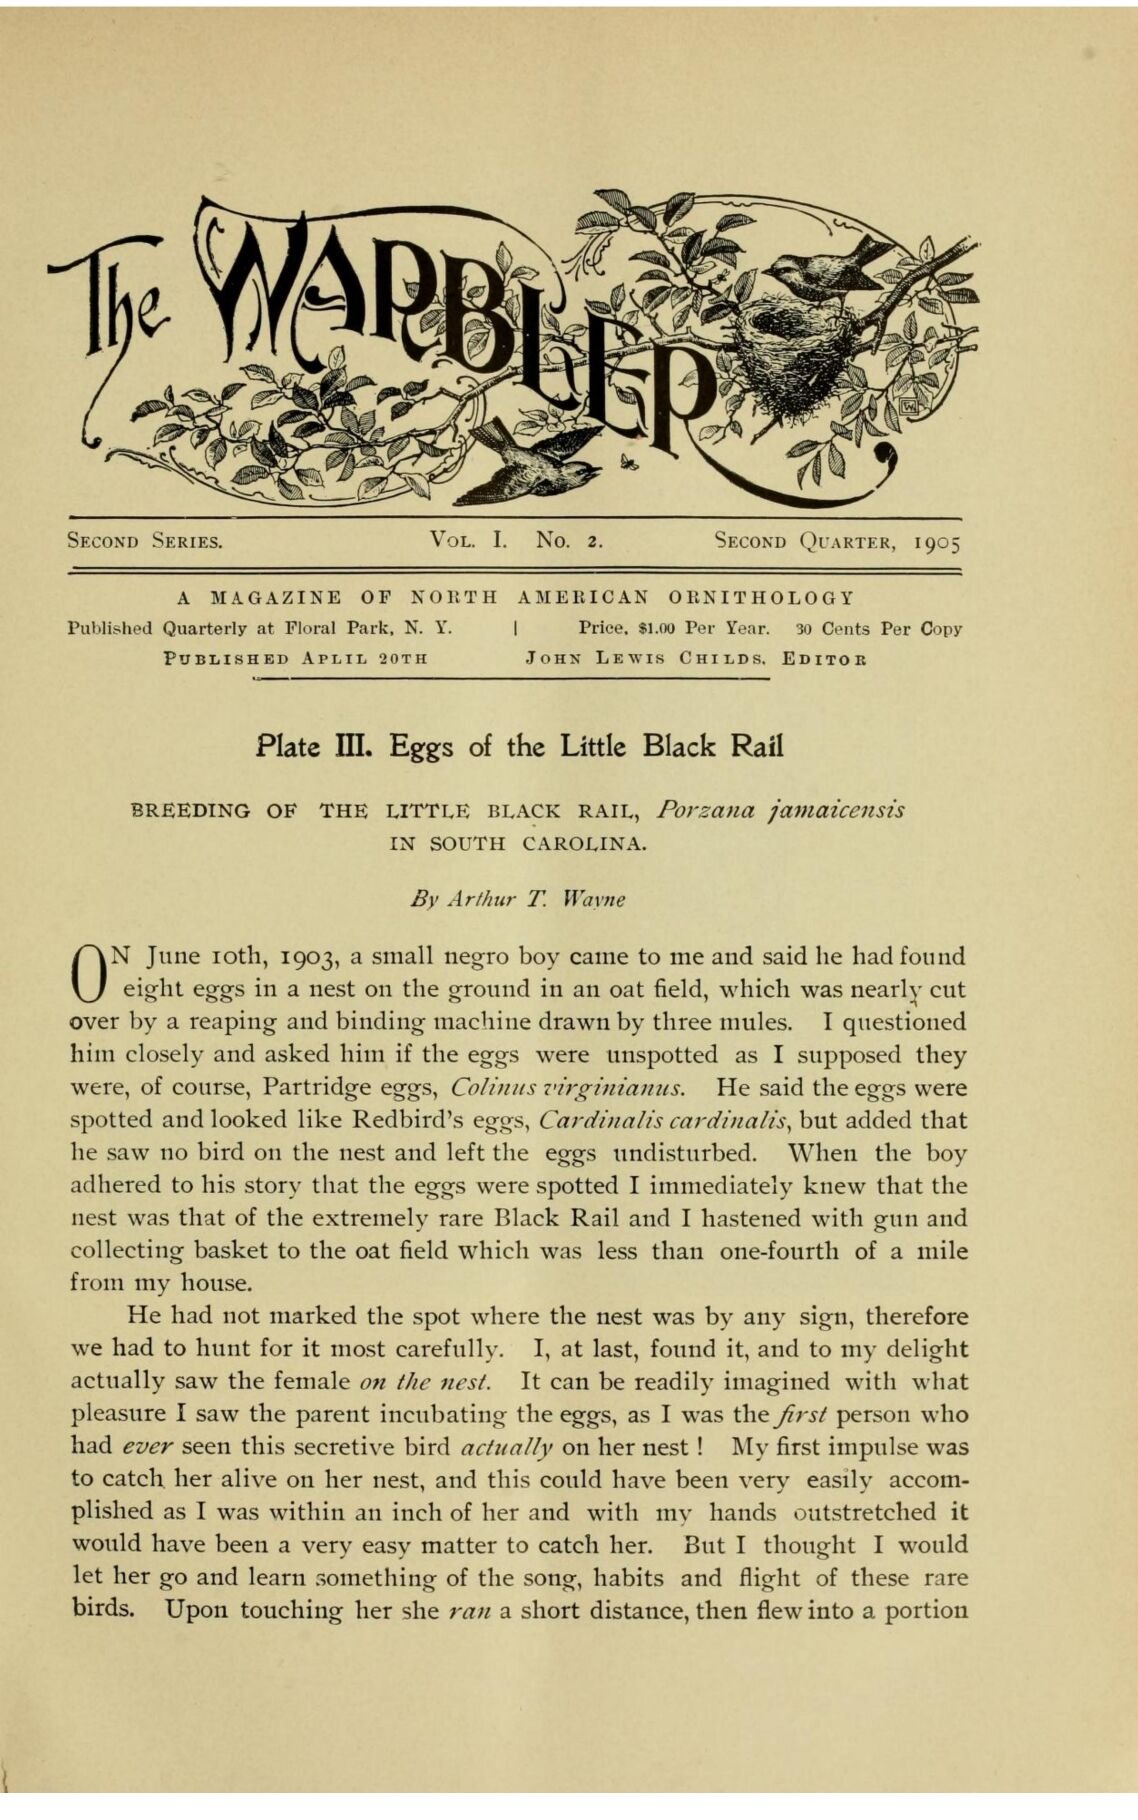 Arthur T. Wayne finds a black rail in 1903